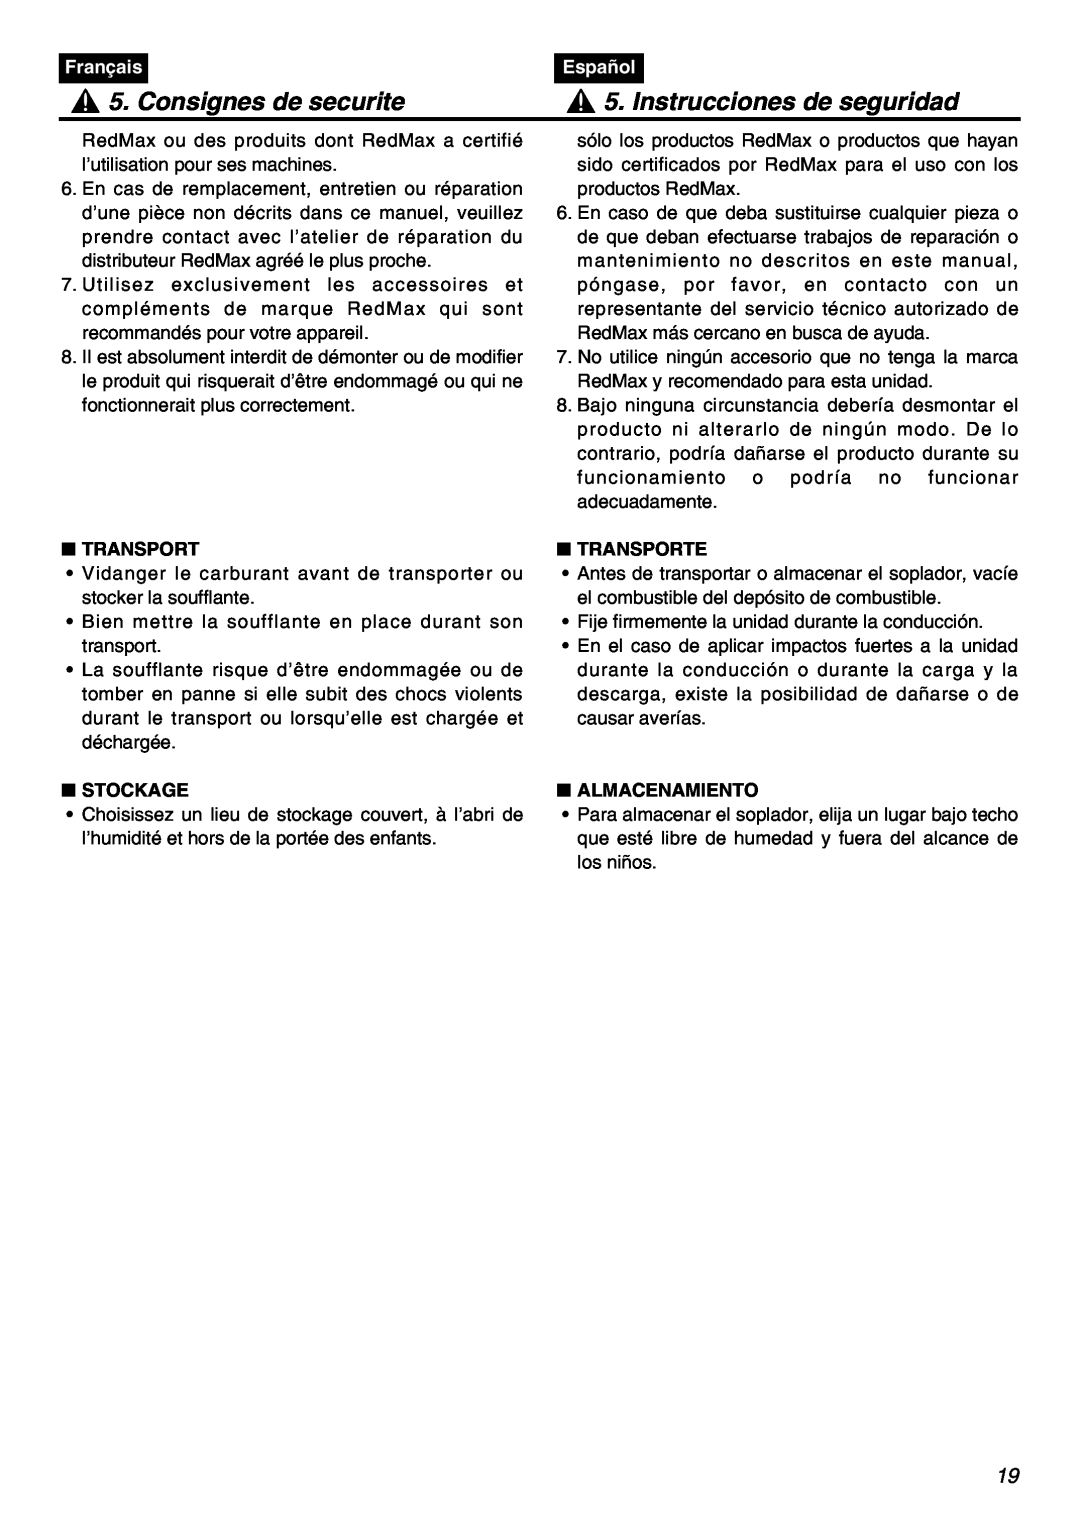 RedMax EBZ8001RH manual Consignes de securite, Instrucciones de seguridad, Français, Español, Stockage, Transporte 